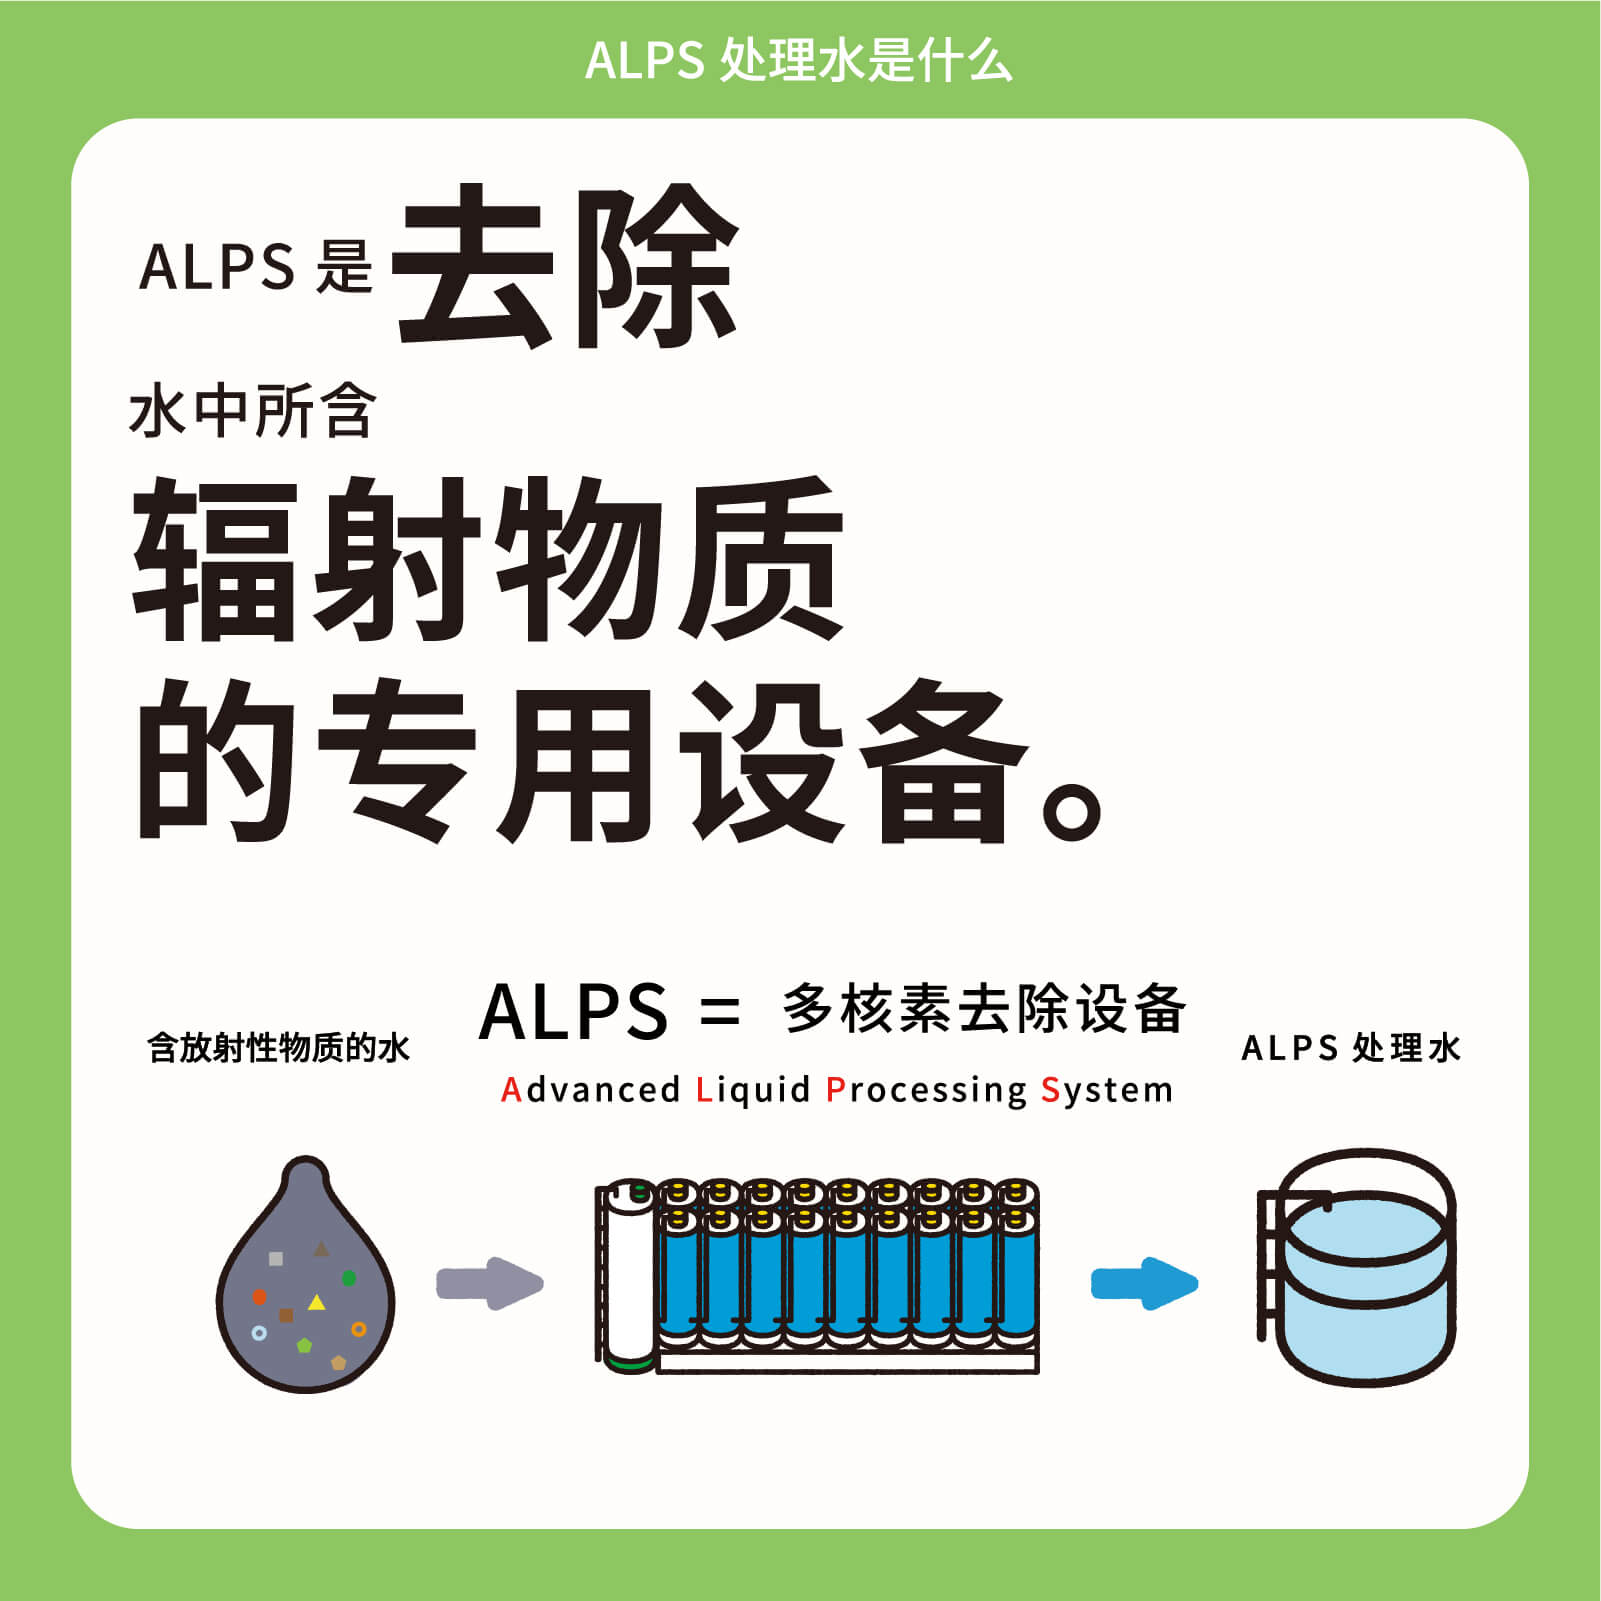 ALPS是去除水中所含辐射物质的专用设备。